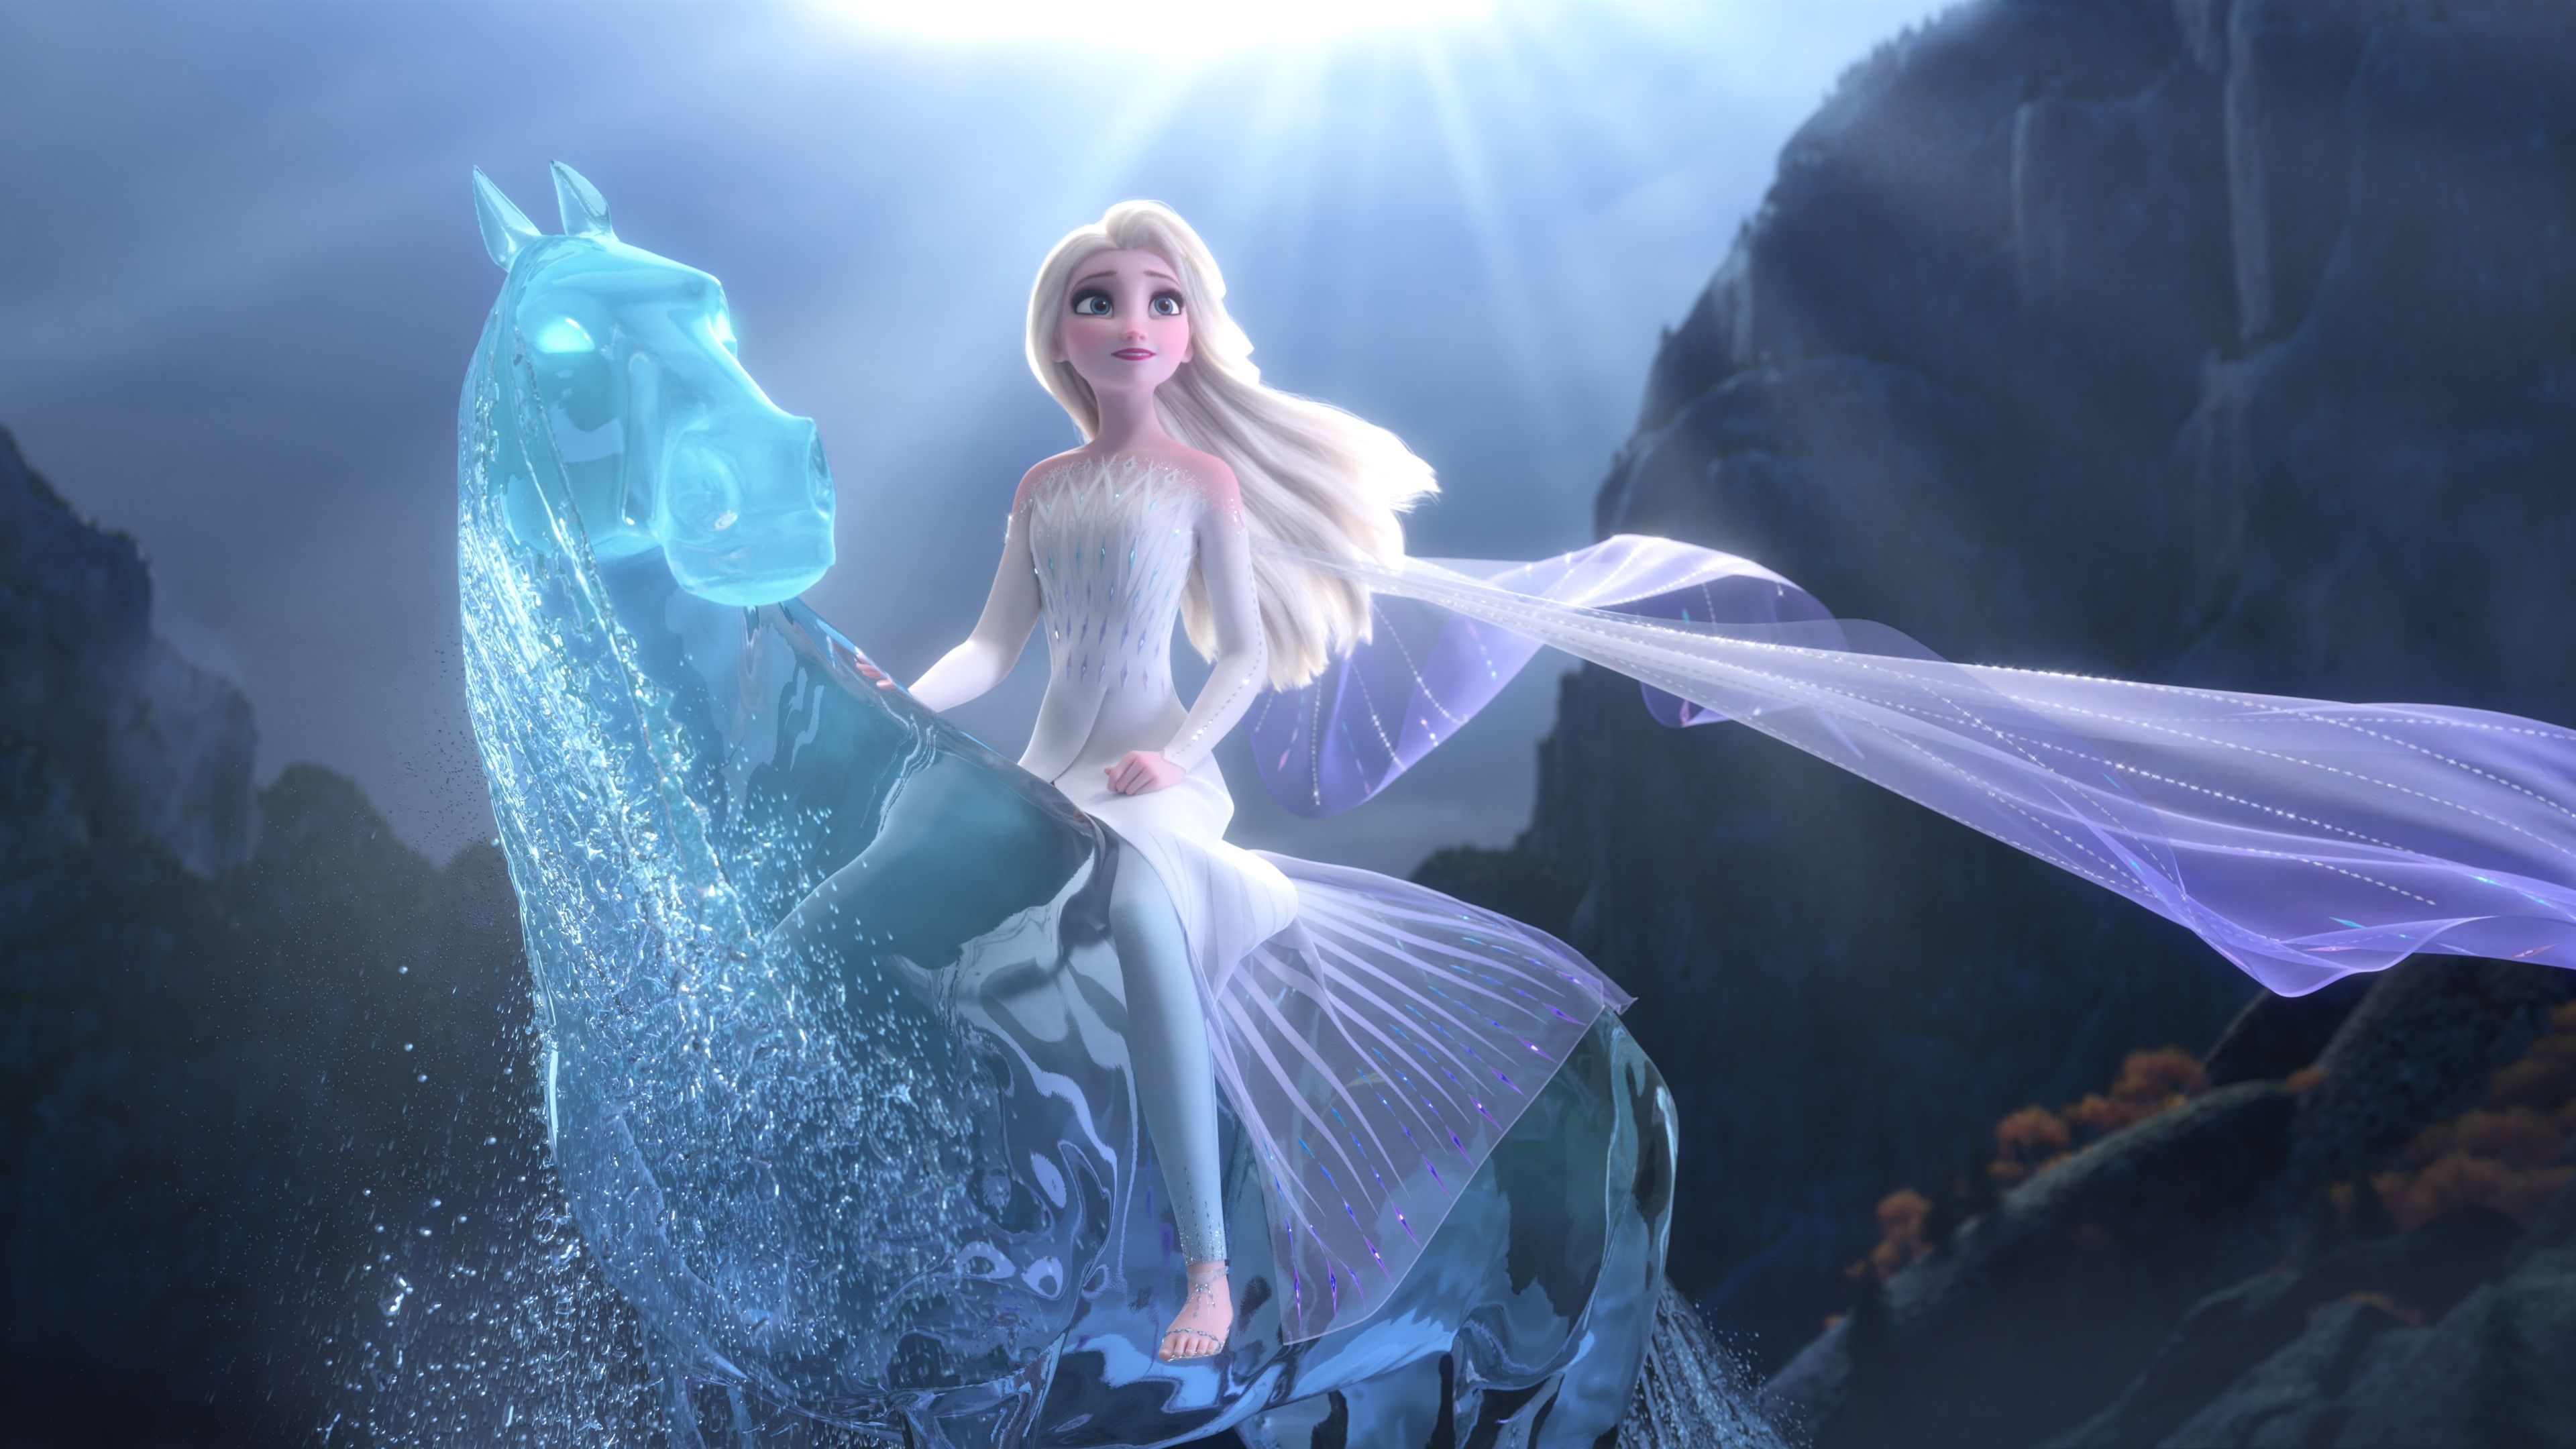 Wallpaper Elsa, Frozen magic water horse 3840x2160 UHD 4K Picture, Image